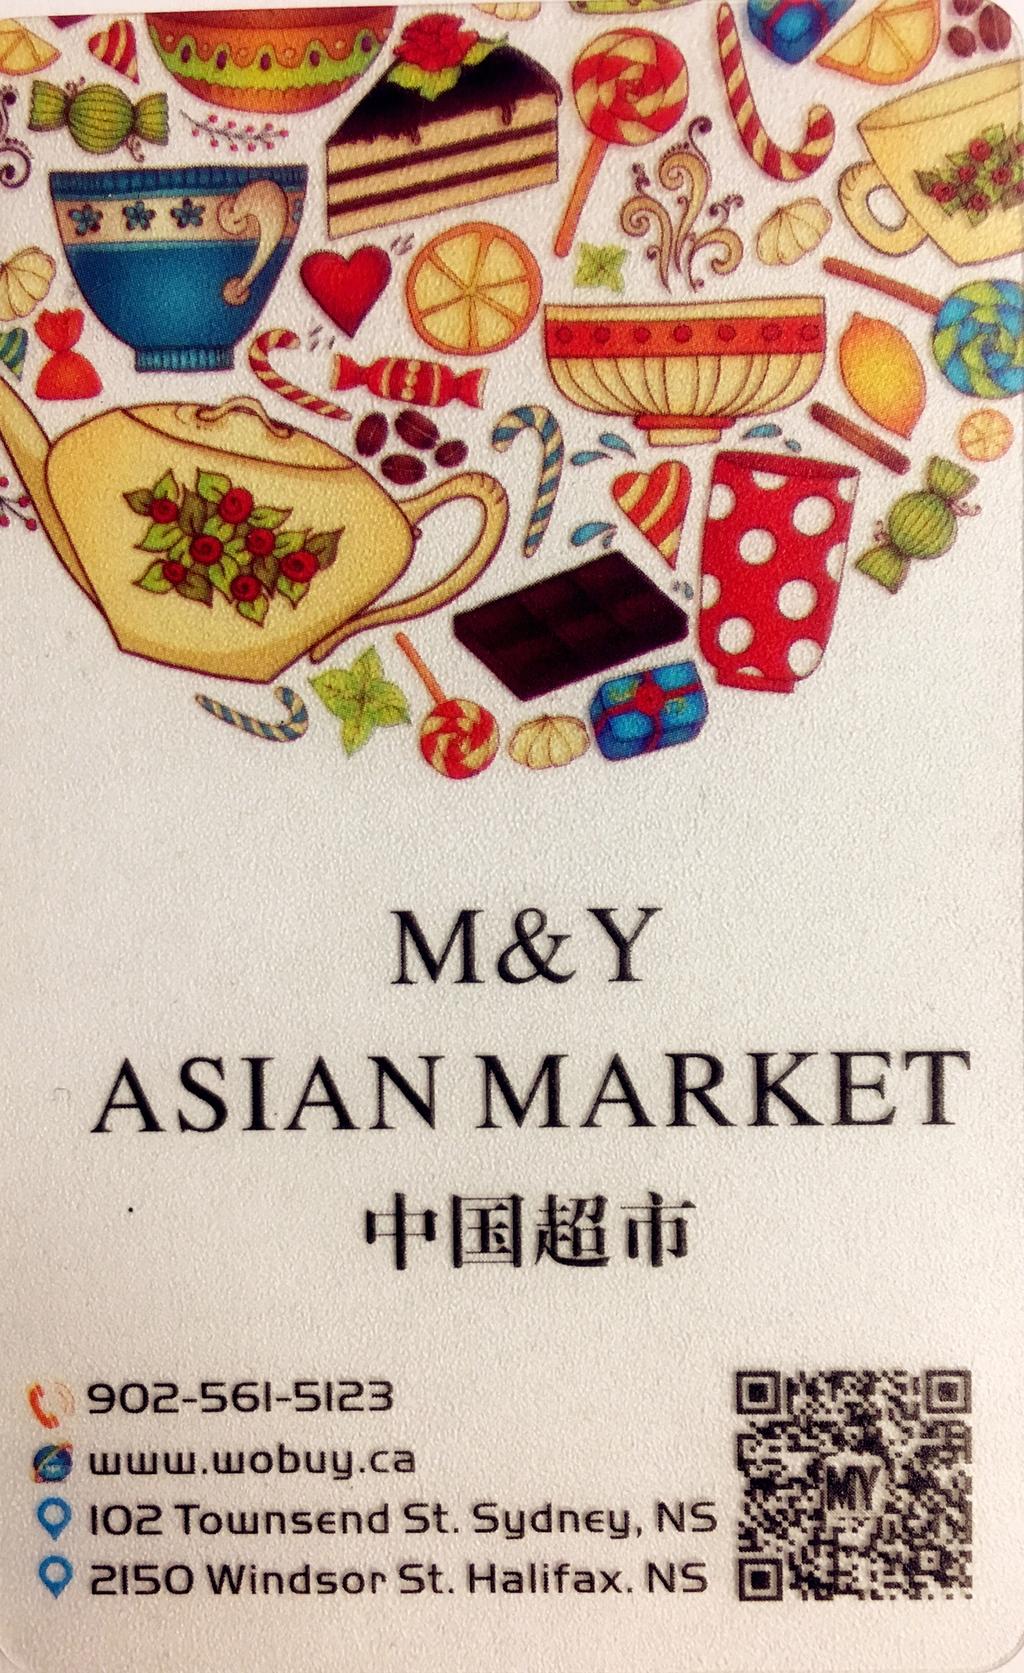 Explore Asian Food at M&Y ASIAN